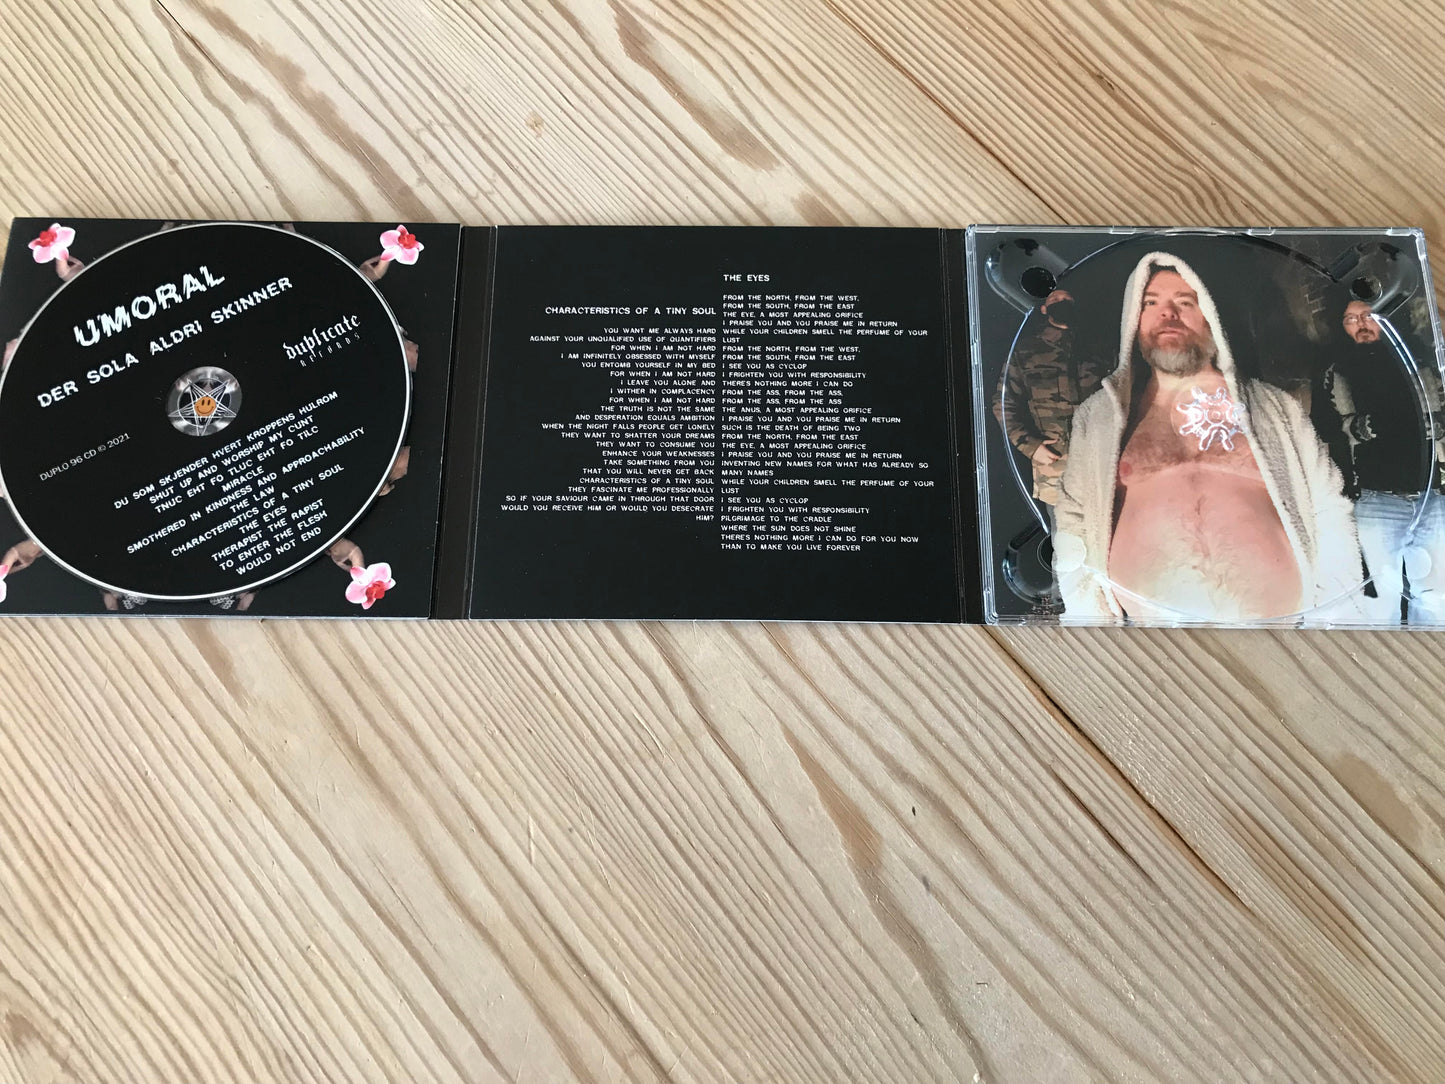 UMORAL - Der Sola Aldri Skinner CD